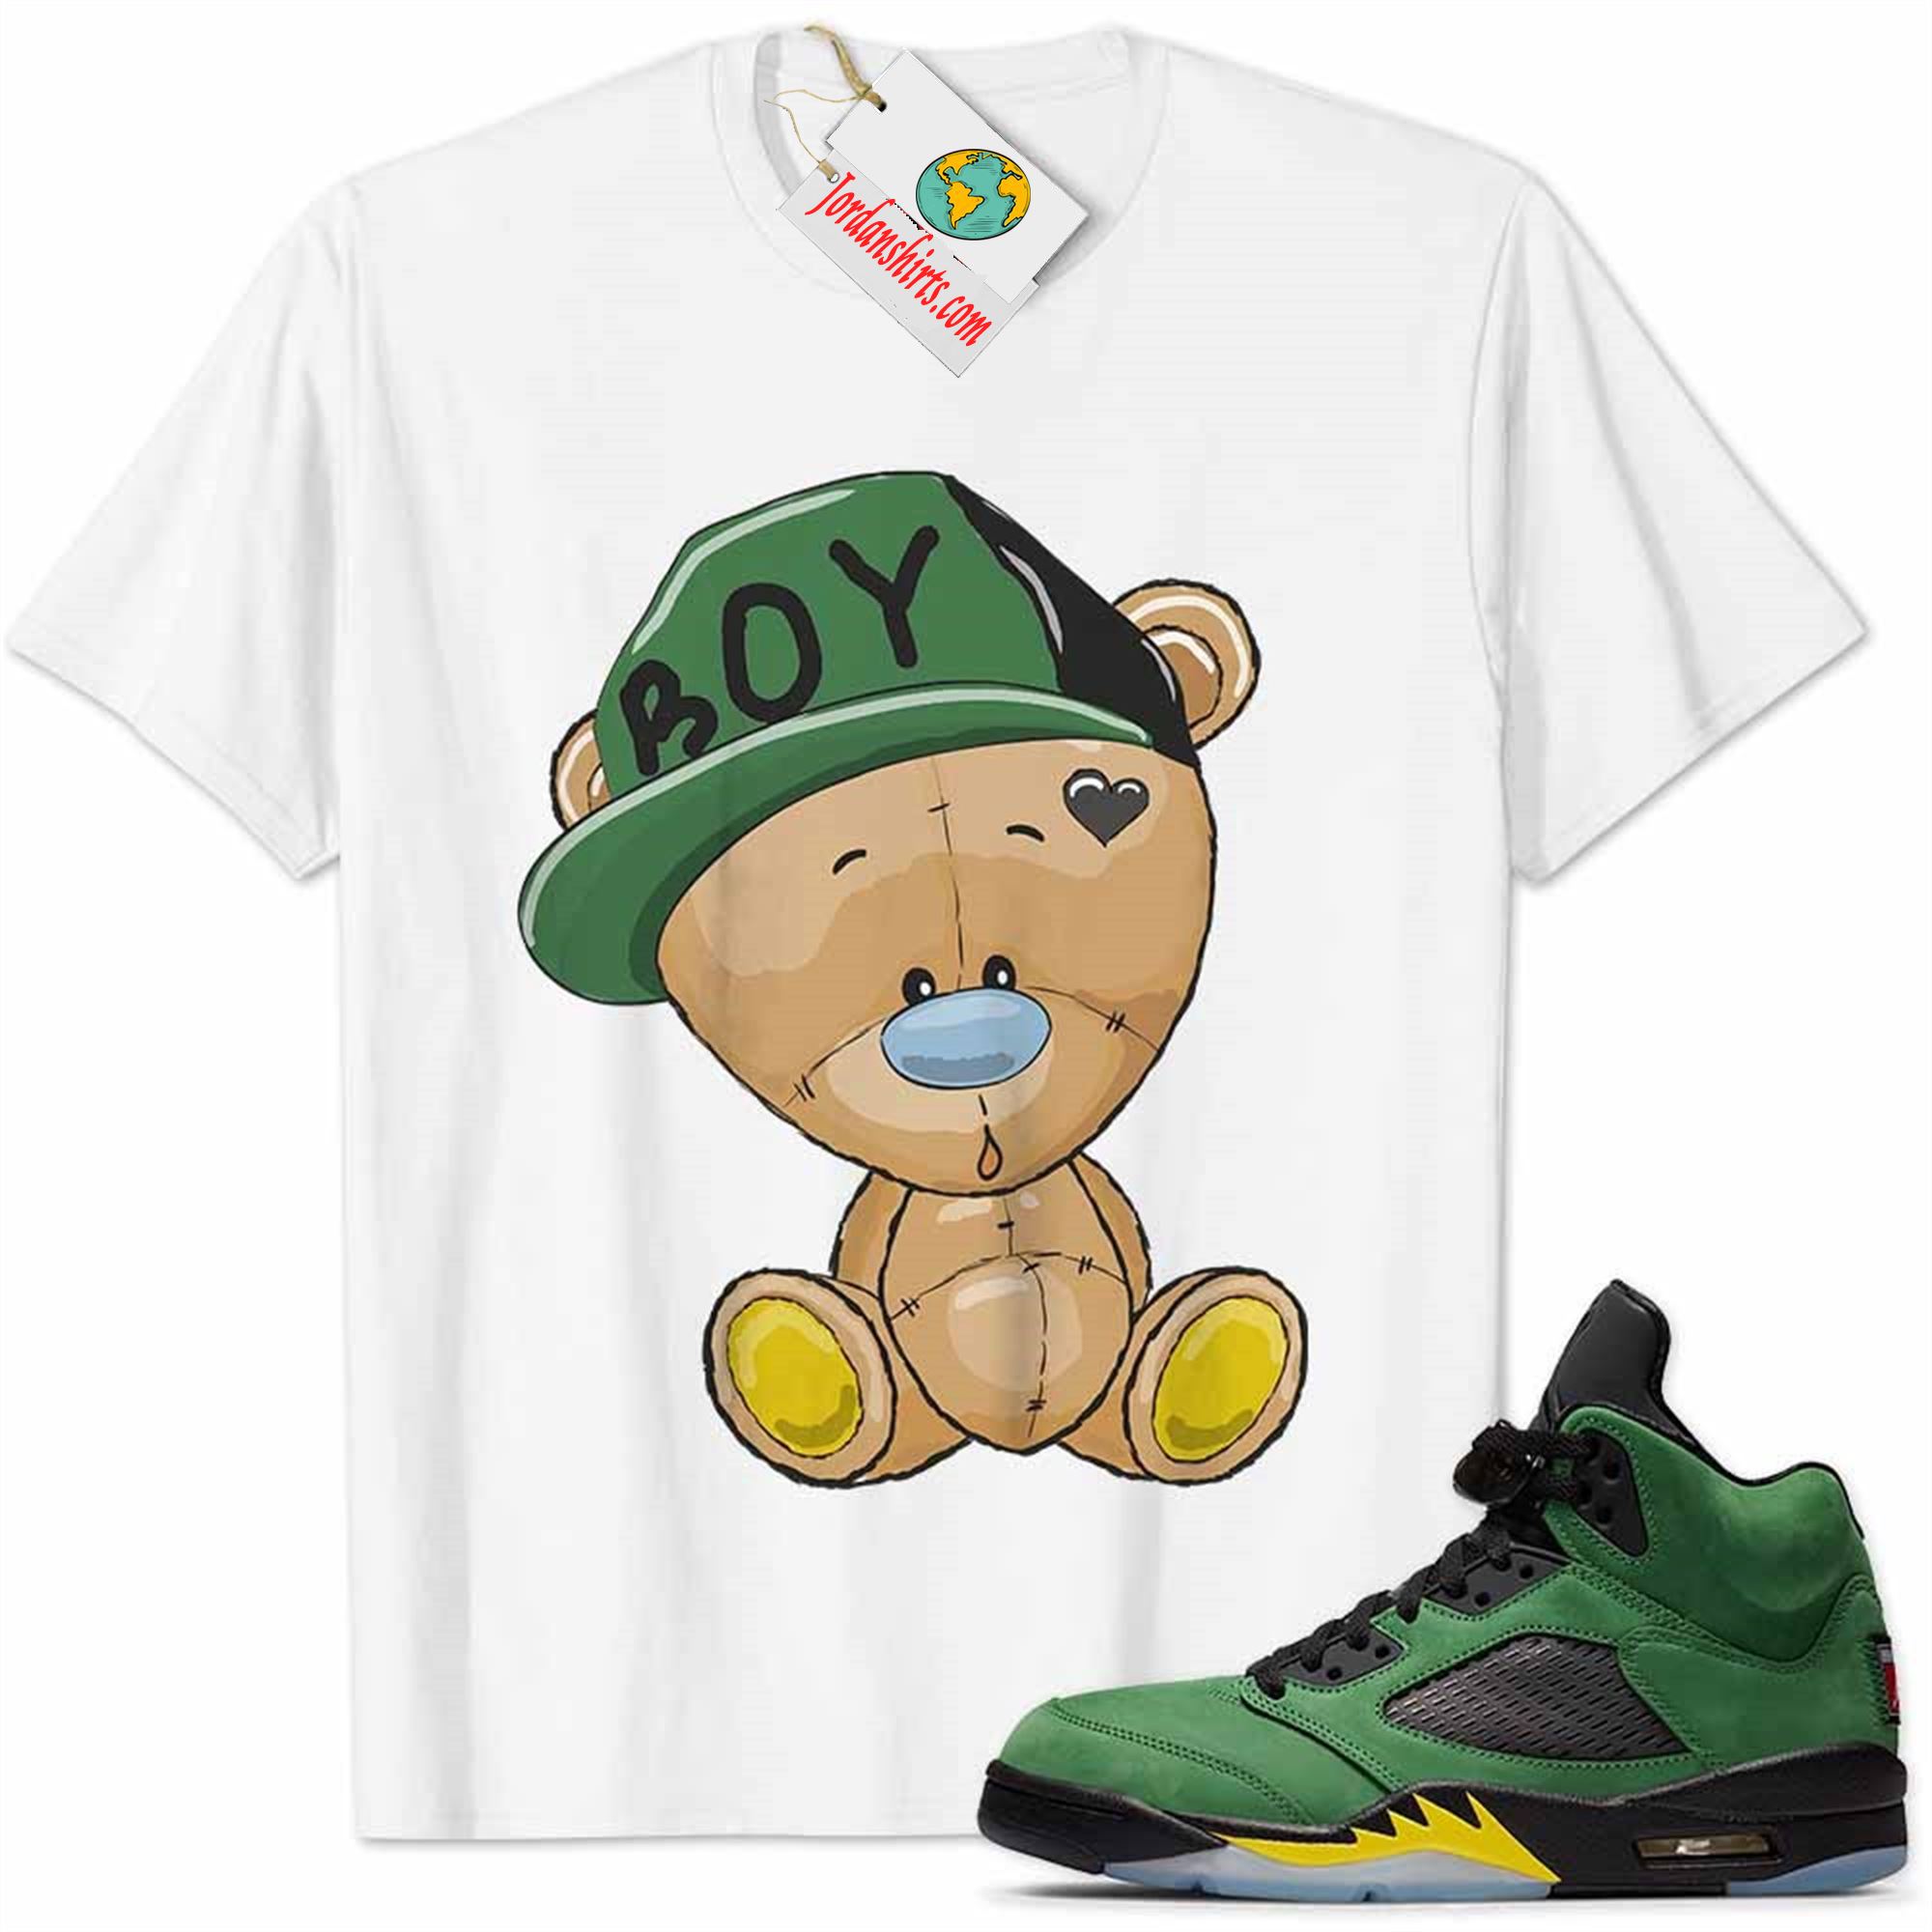 Jordan 5 Shirt, Oregon Shirt Cute Baby Teddy Bear White Full Size Up To 5xl